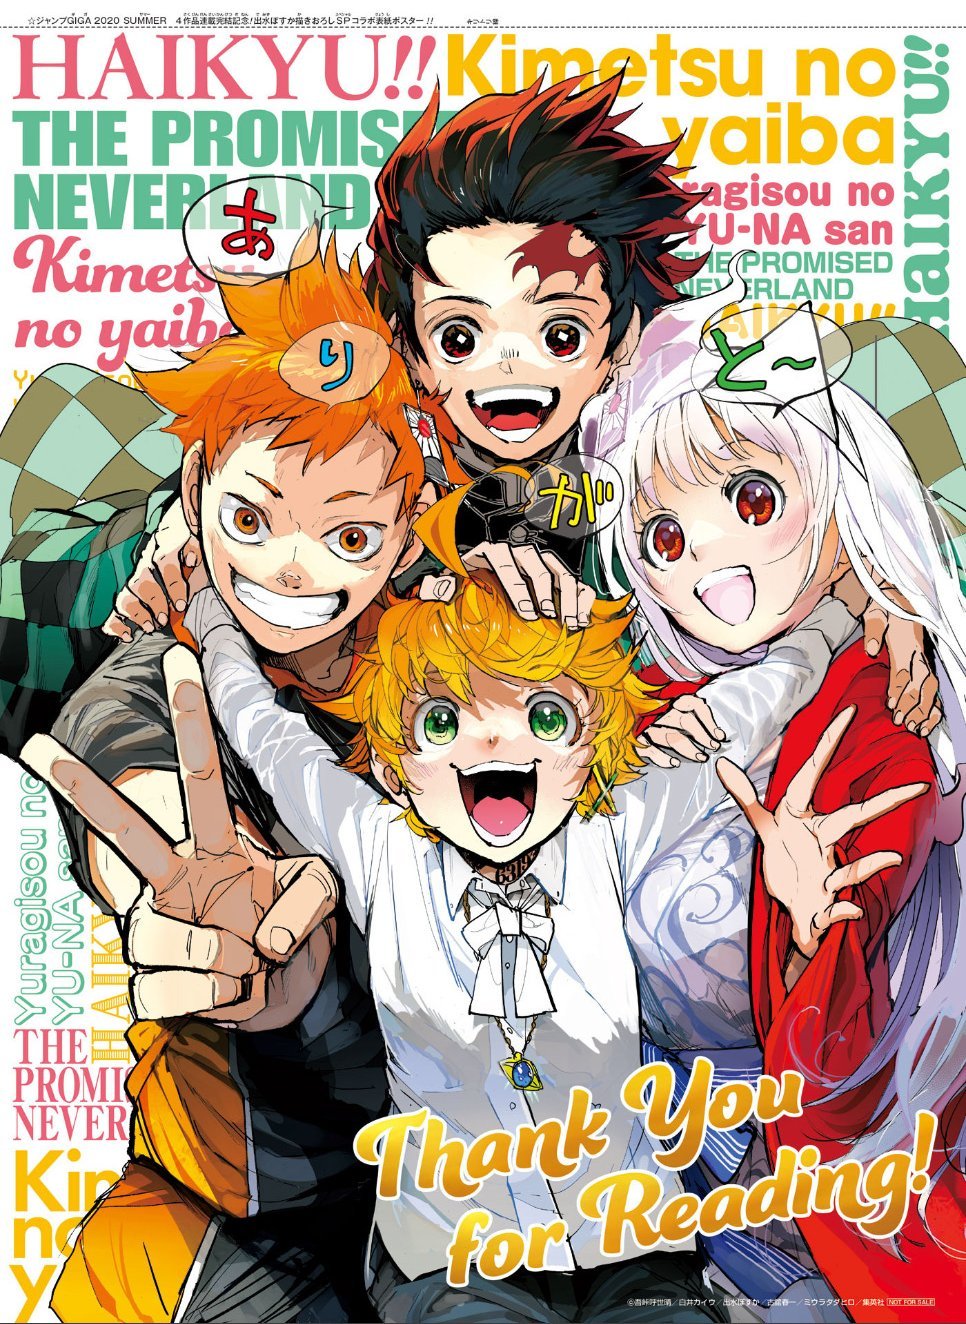 Shonen Jump Magazine Covers Demon Slayer One Piece Episode 999 Cover